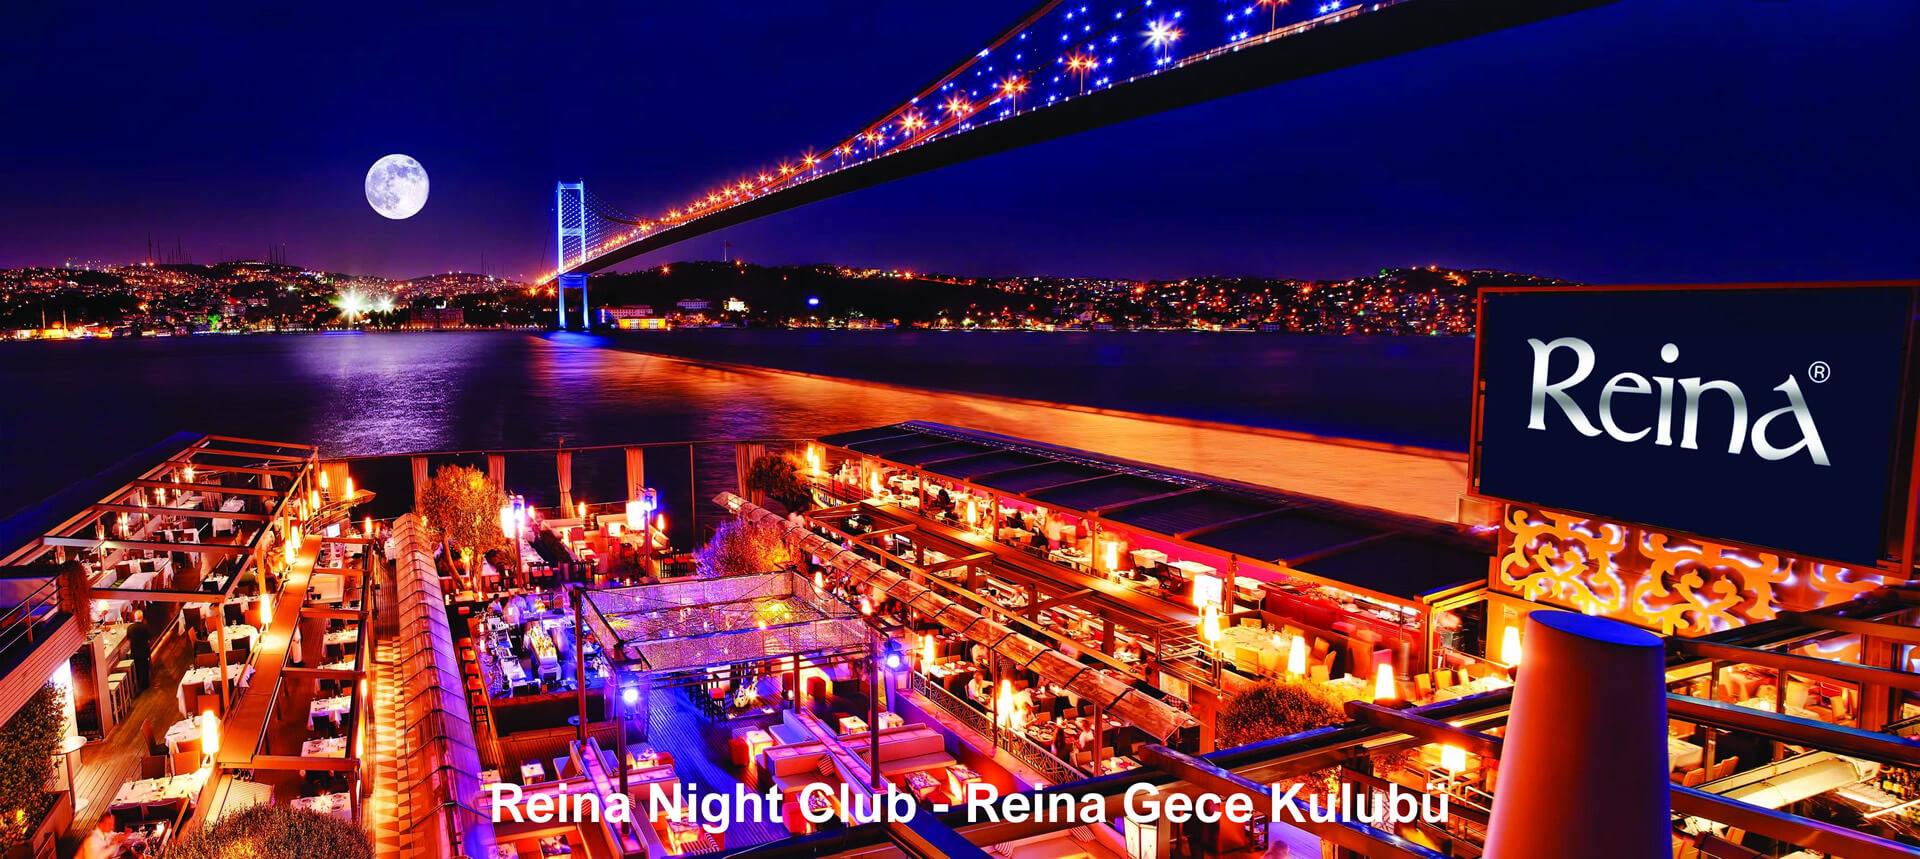 Reina Night Club - Reina Gece Kulubü